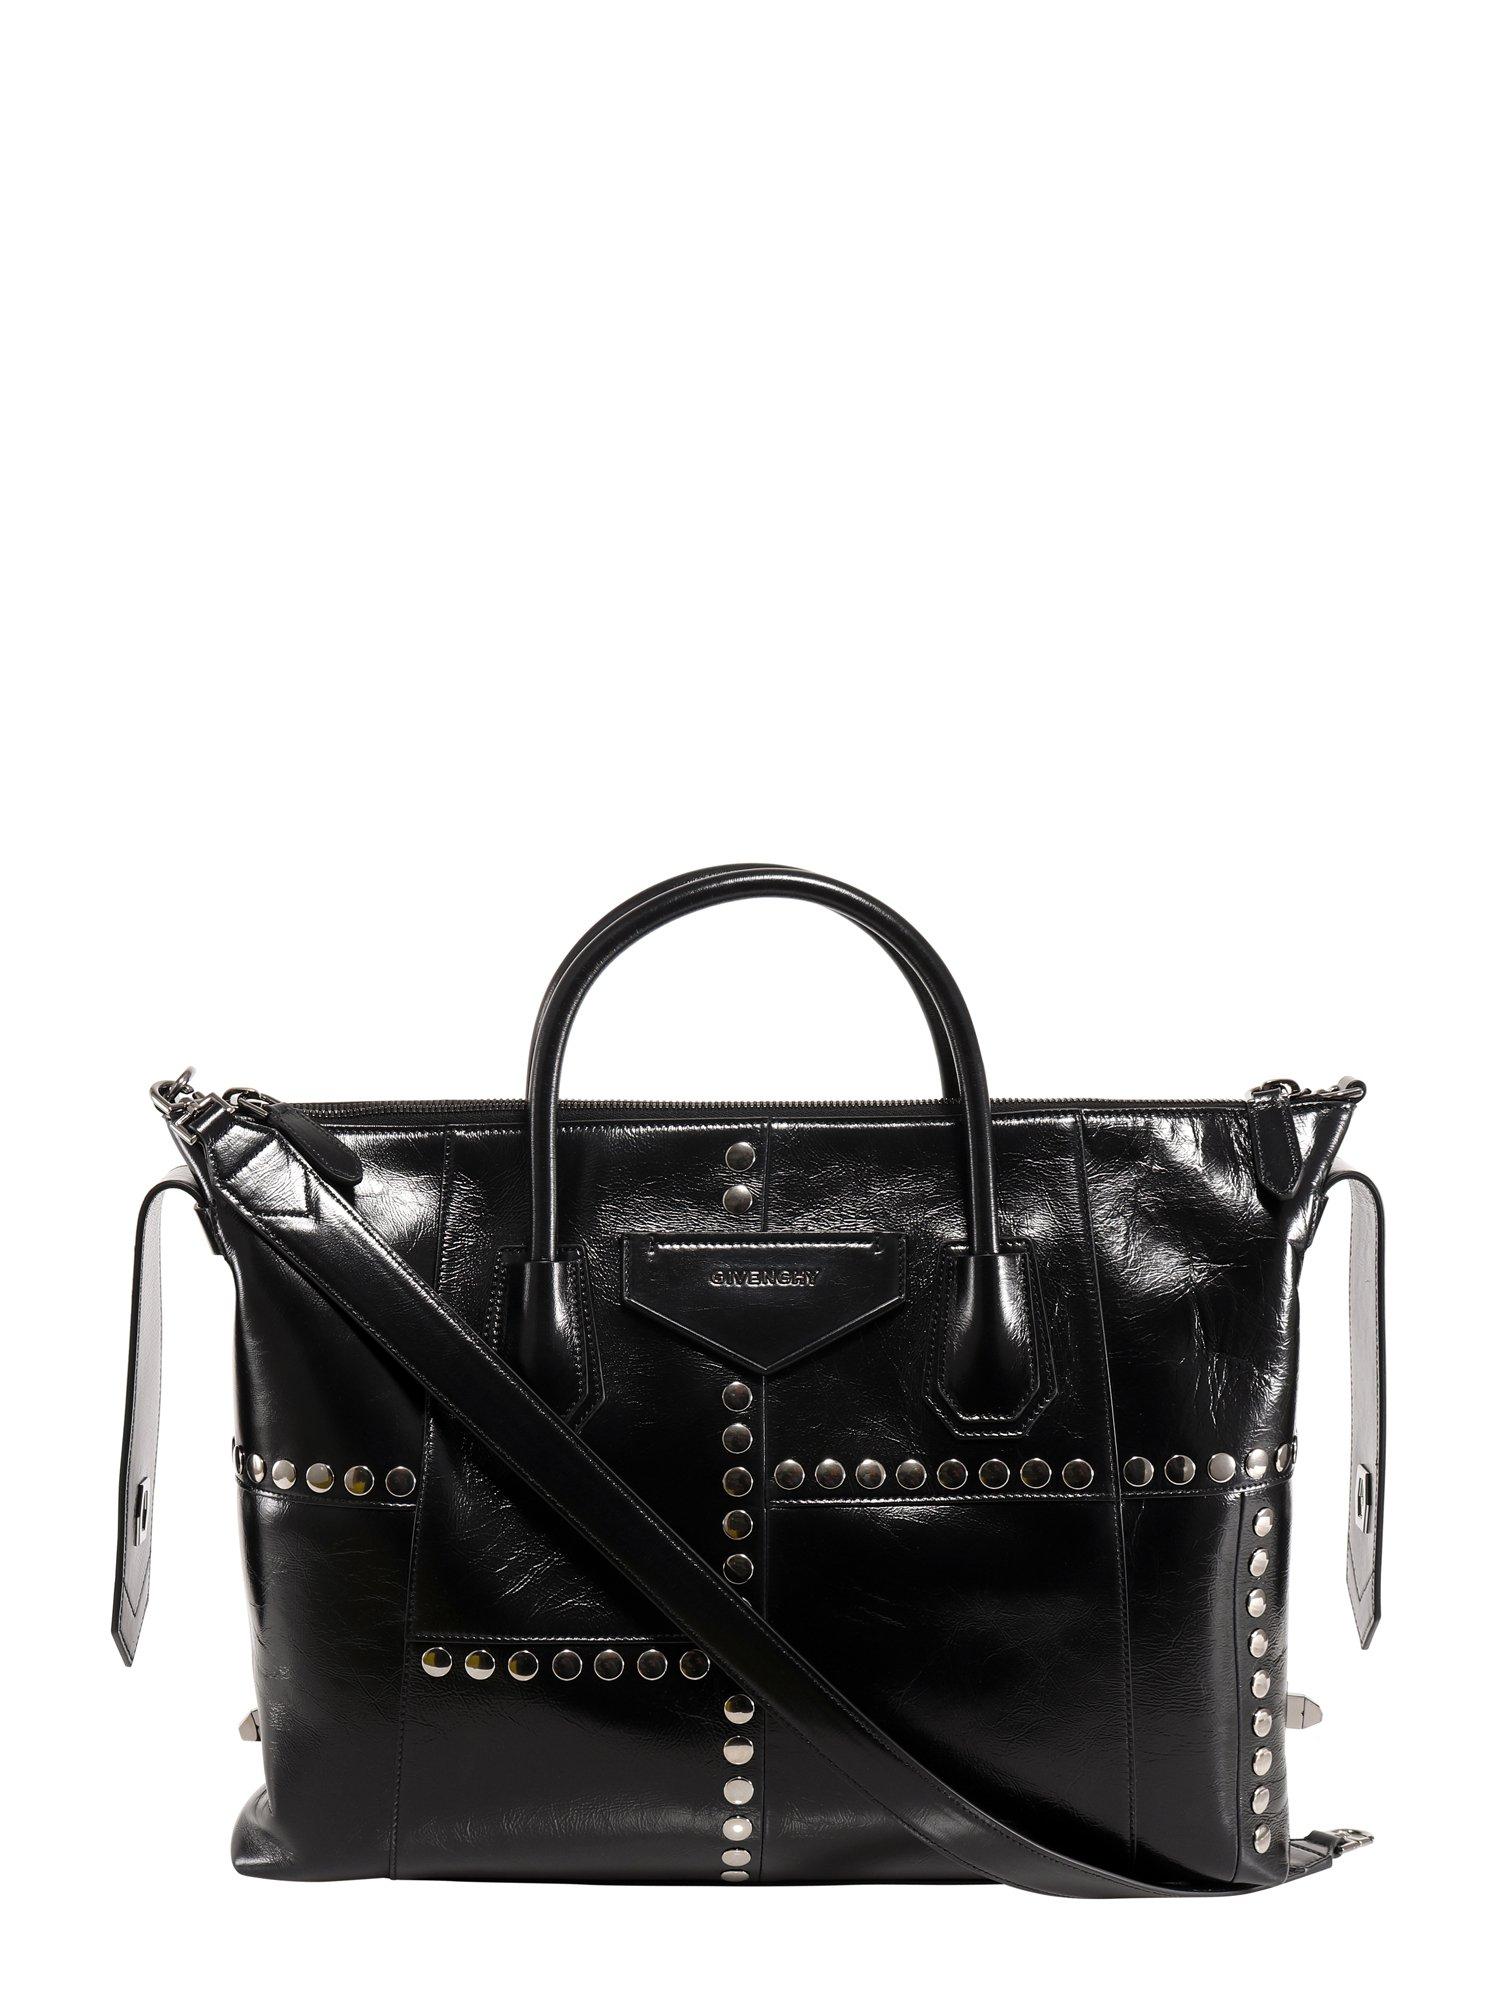 Givenchy Small Leather Antigona Soft Bag in Black